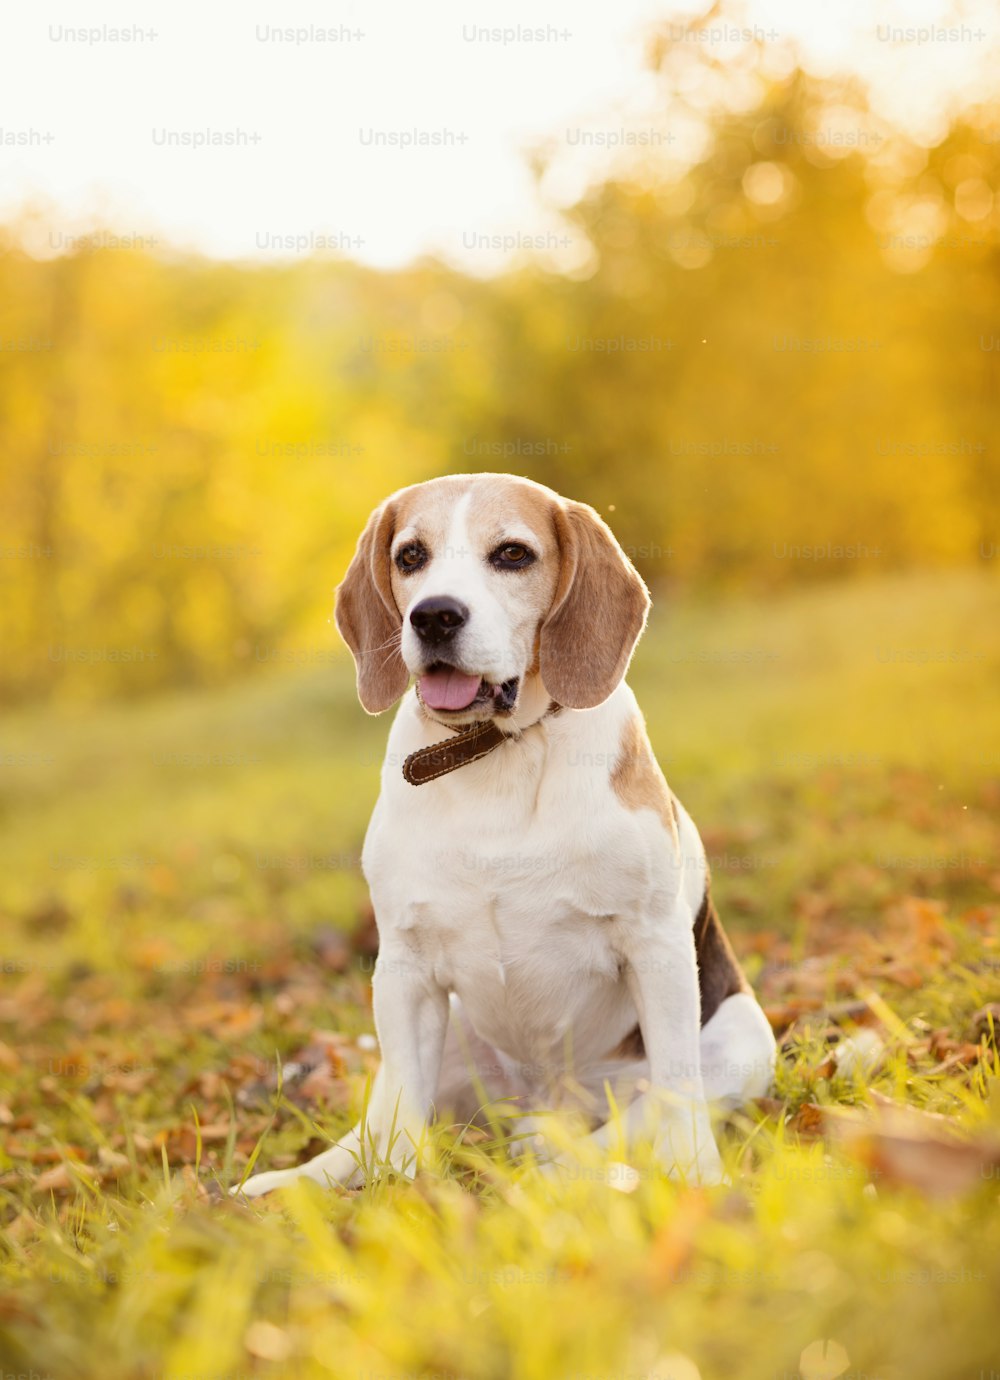 Beagle dog portrait on sunshine background in nature